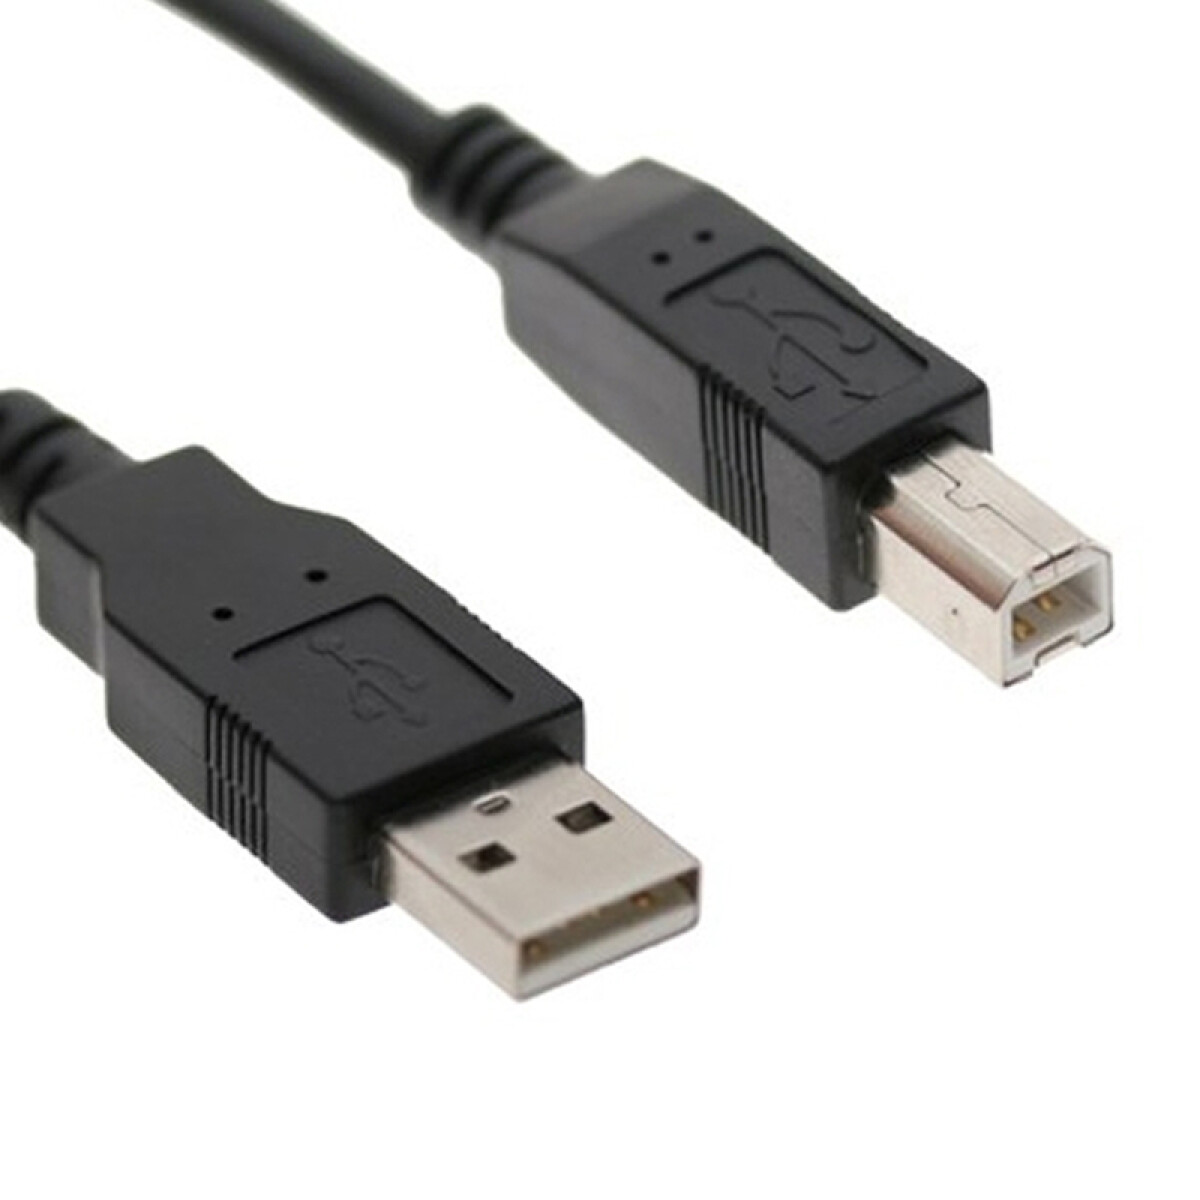 Cable Xtreme USB 2.0 5m para impresora multifución - Unica 